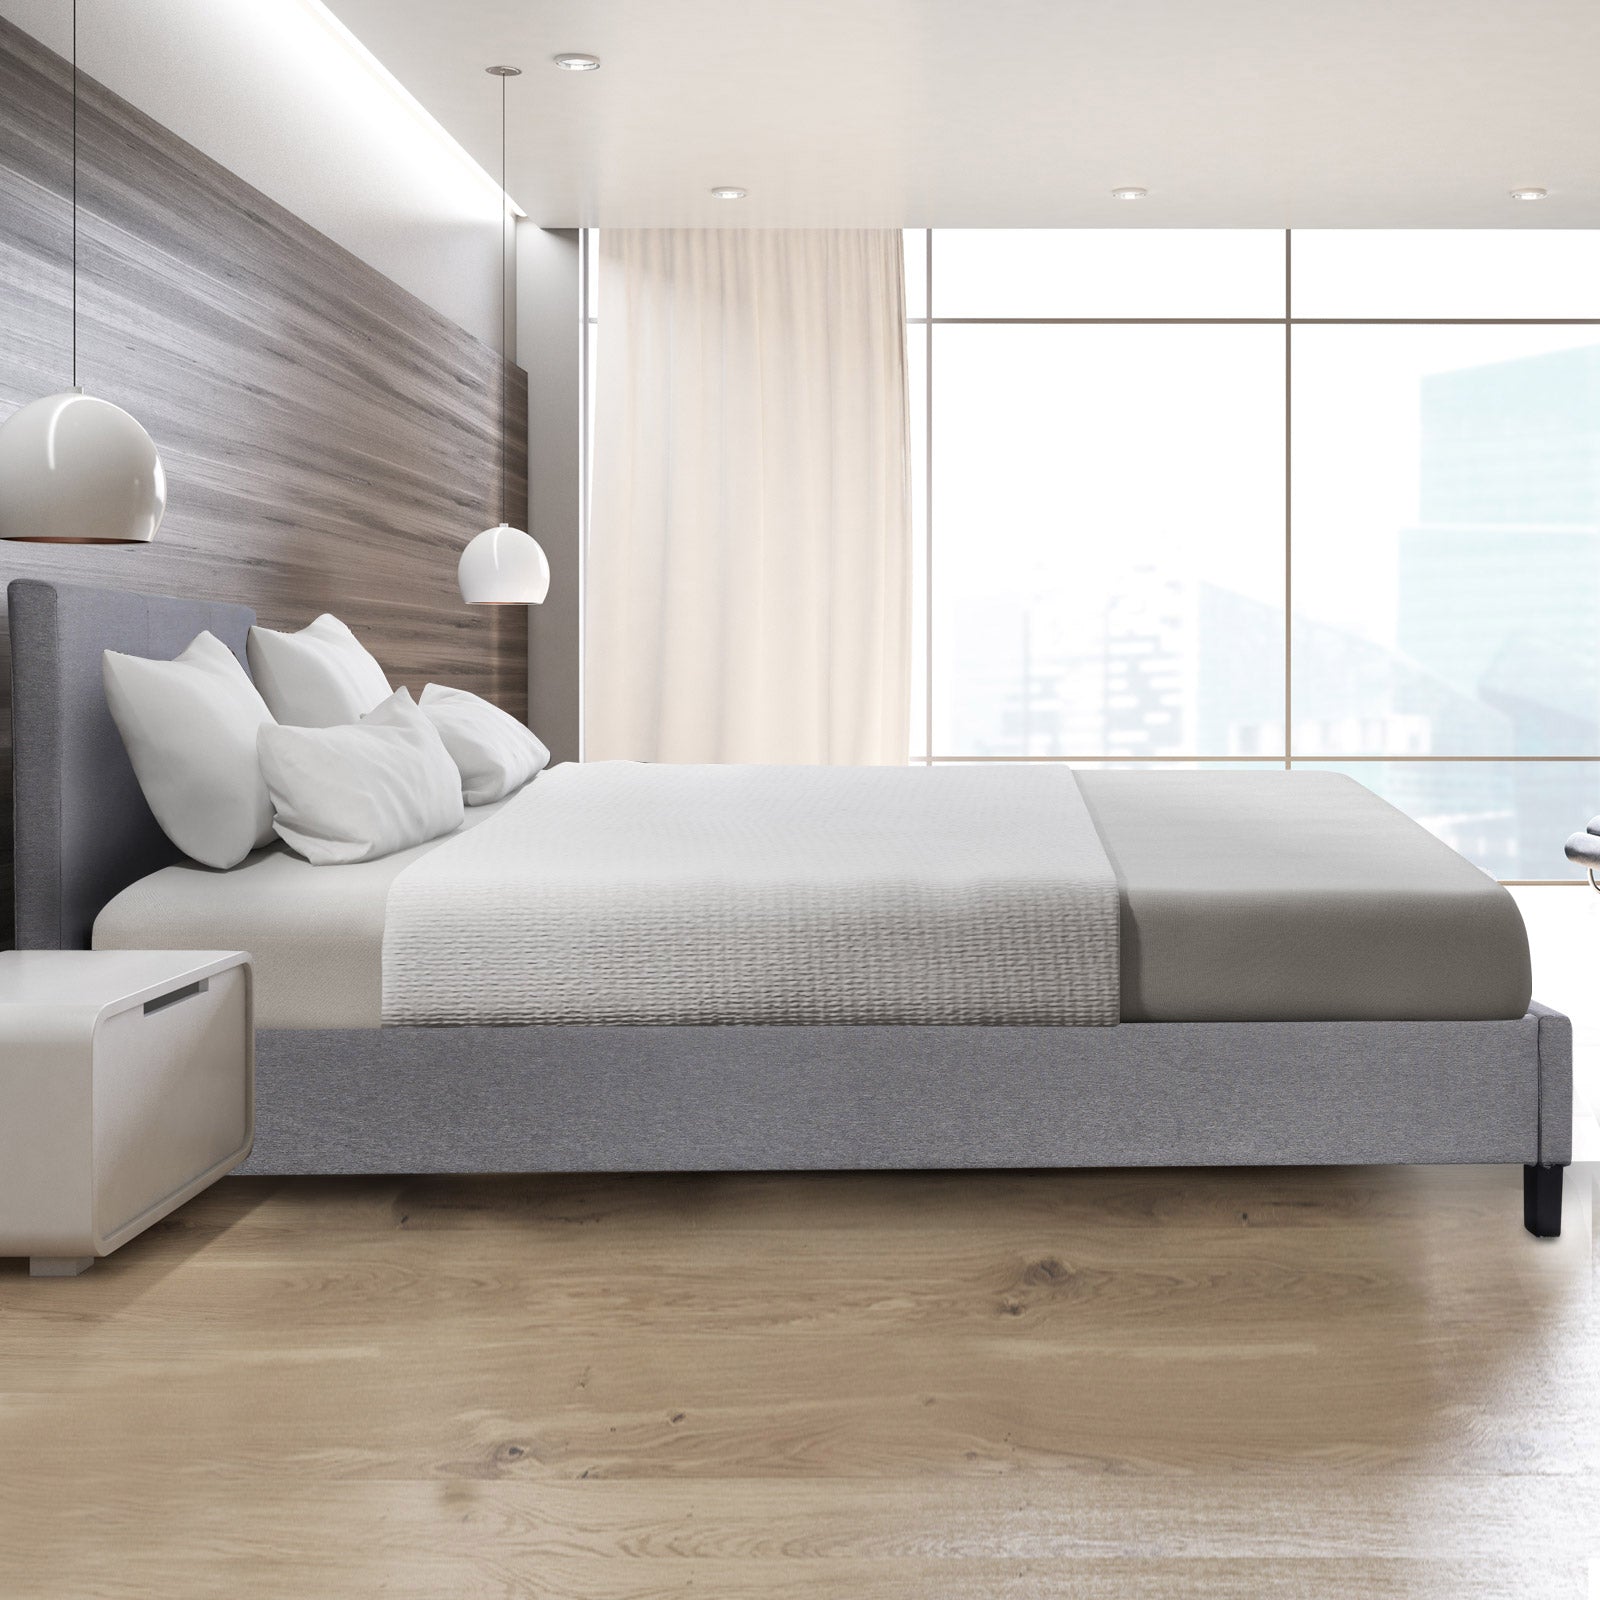 Milano Sienna Luxury Bed with Headboard (Model 2) - Grey No.28 - Single